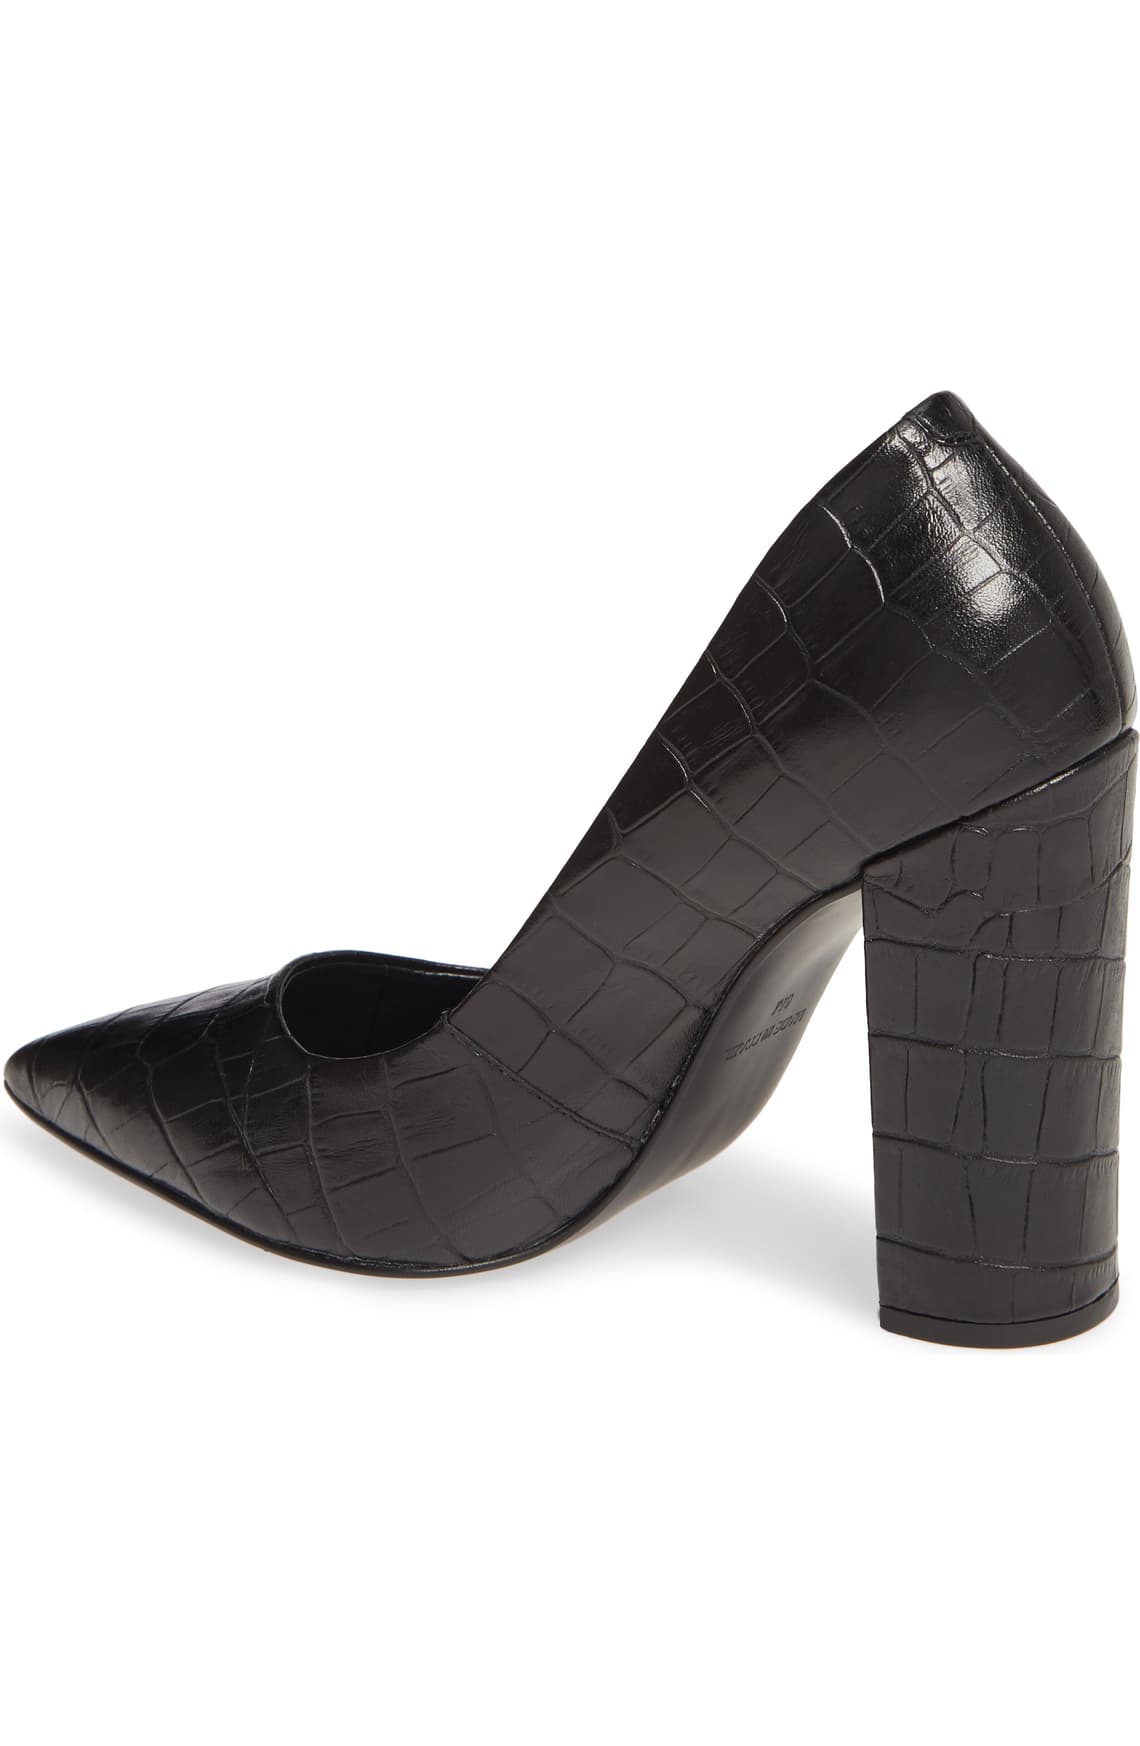 Dual strap 4inch block high heels (white) NON SLIP SOLE at best price in  New Delhi